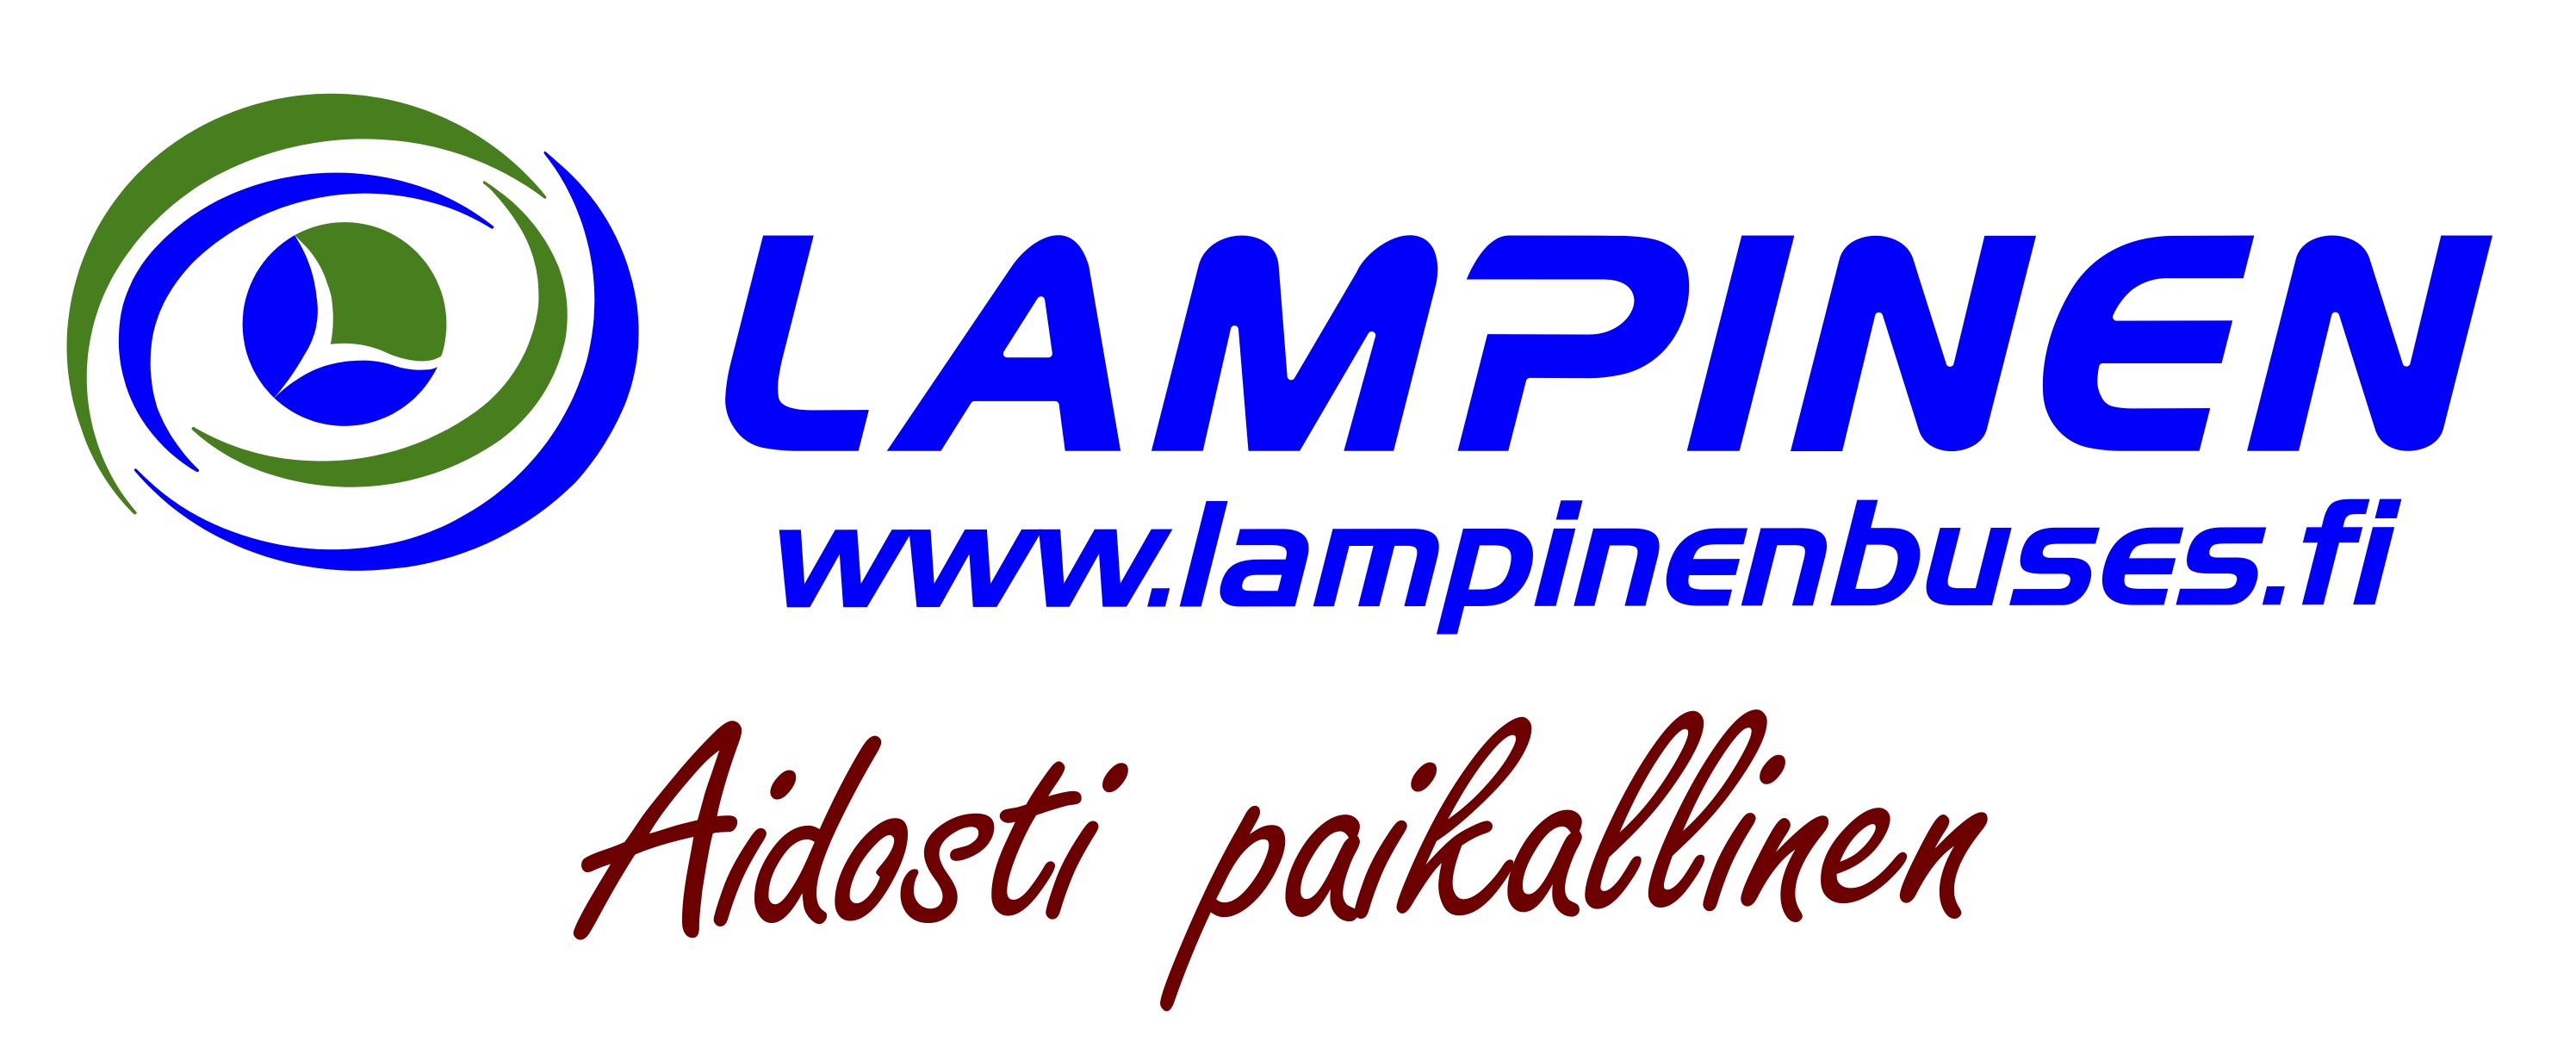 Lampinen logo2